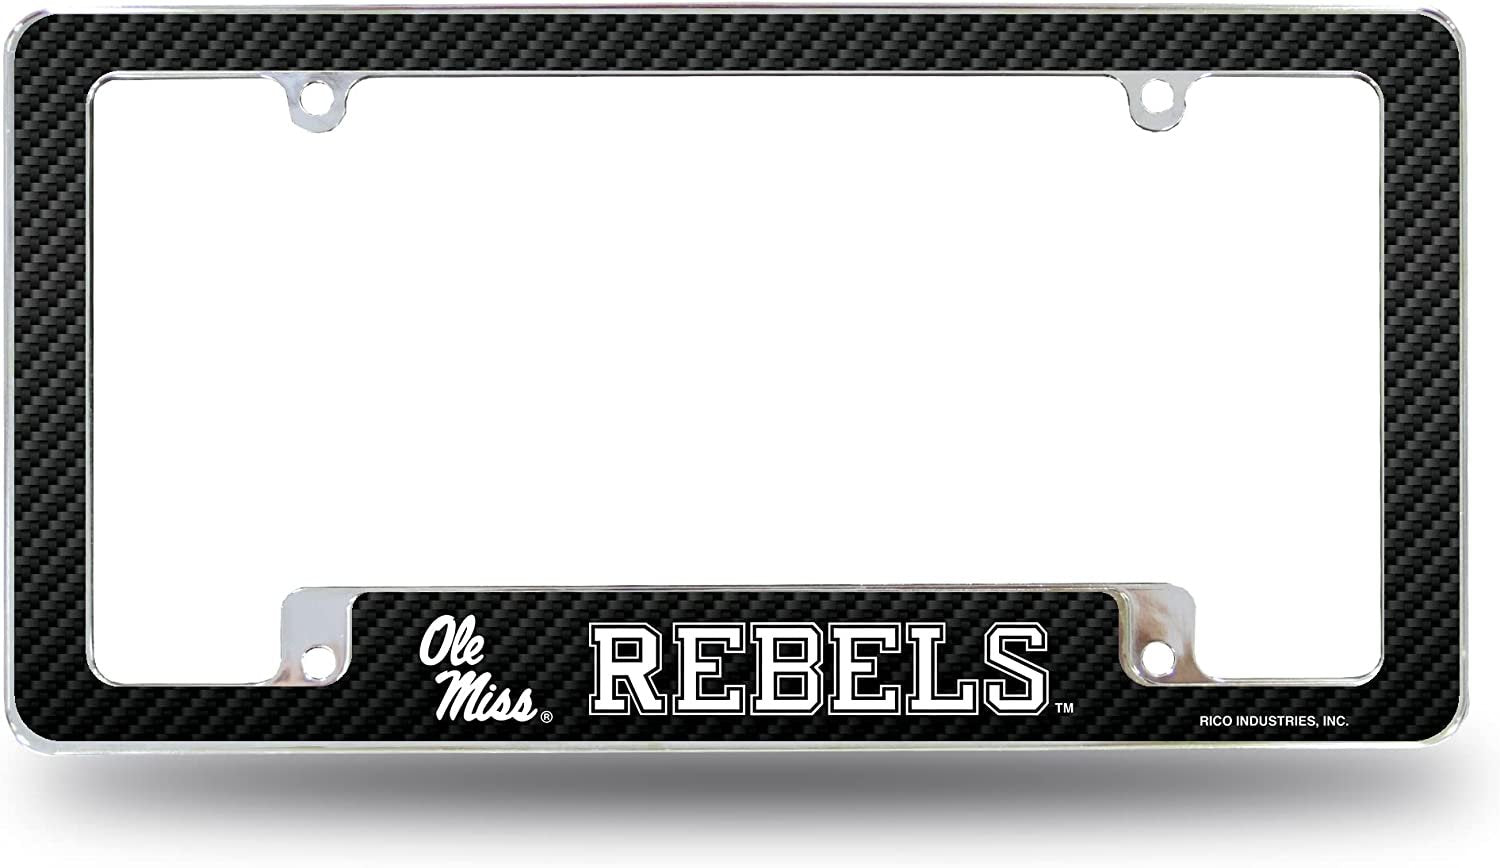 University of Mississippi Rebels Ole Miss Metal License Plate Frame Chrome Tag Cover 12x6 Inch Carbon Fiber Design